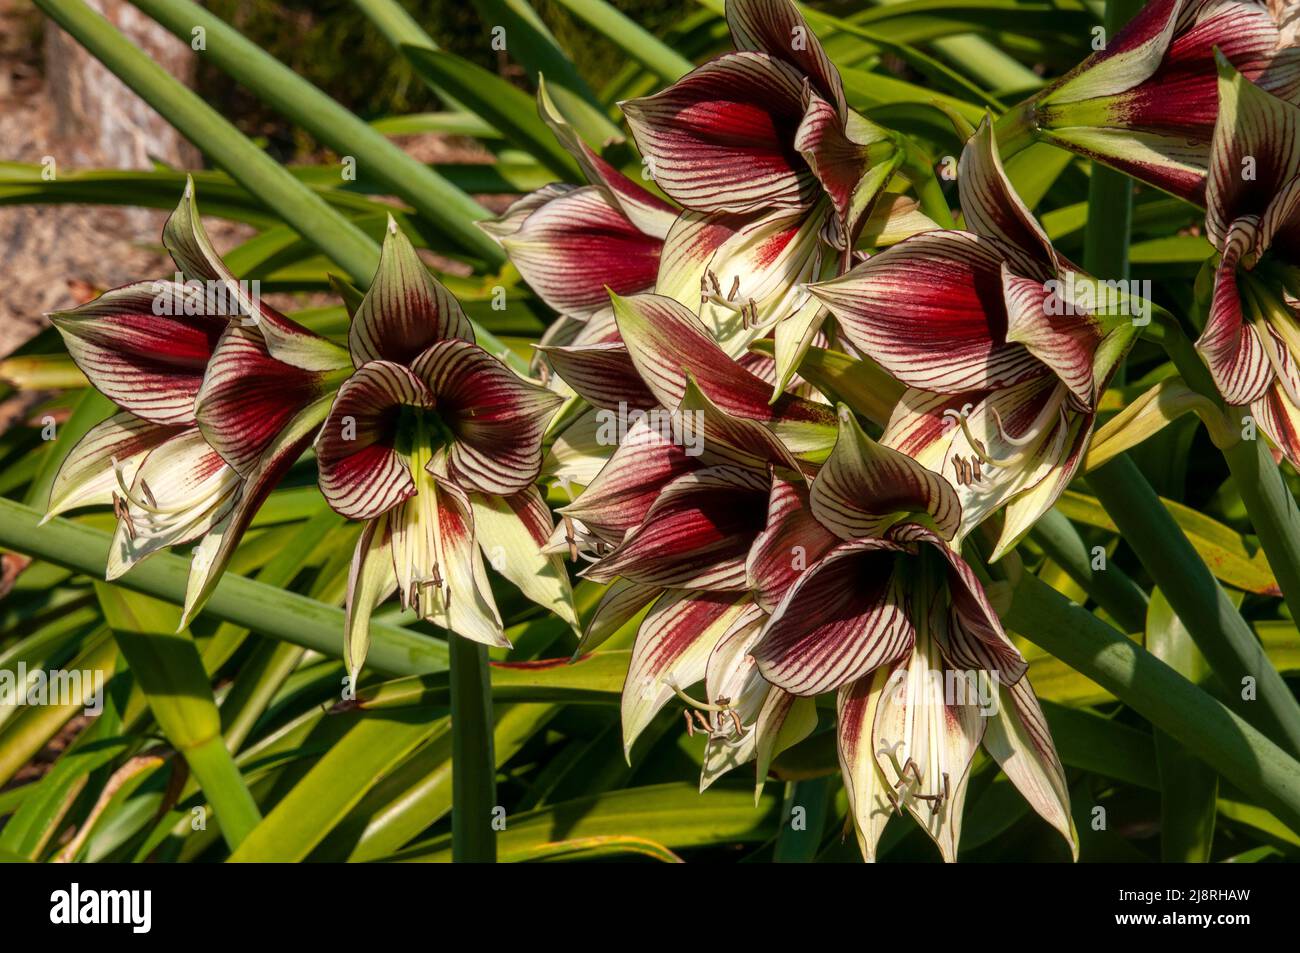 Sydney Australia, striking flowers of the hippeastrum papilio or butterfly amaryllis bulbs Stock Photo